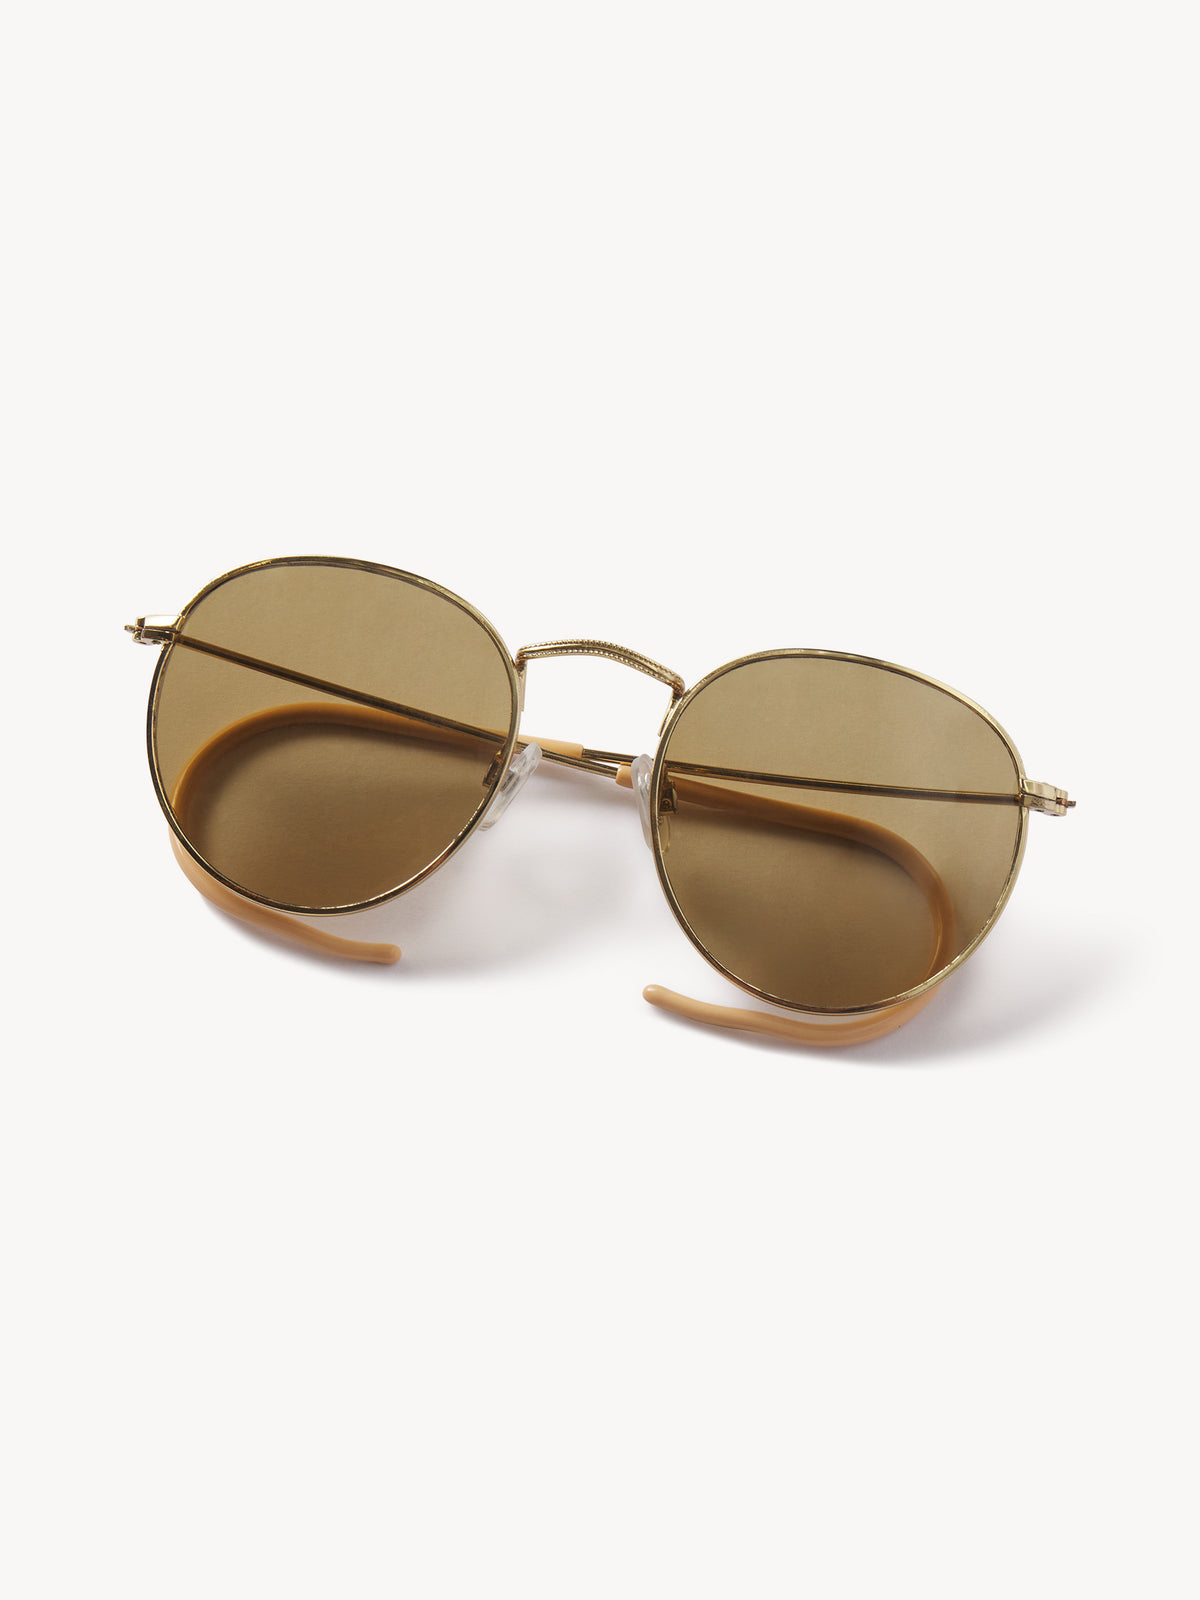 Gold Frame Drivers Sunglasses - 0162 - Product Flat